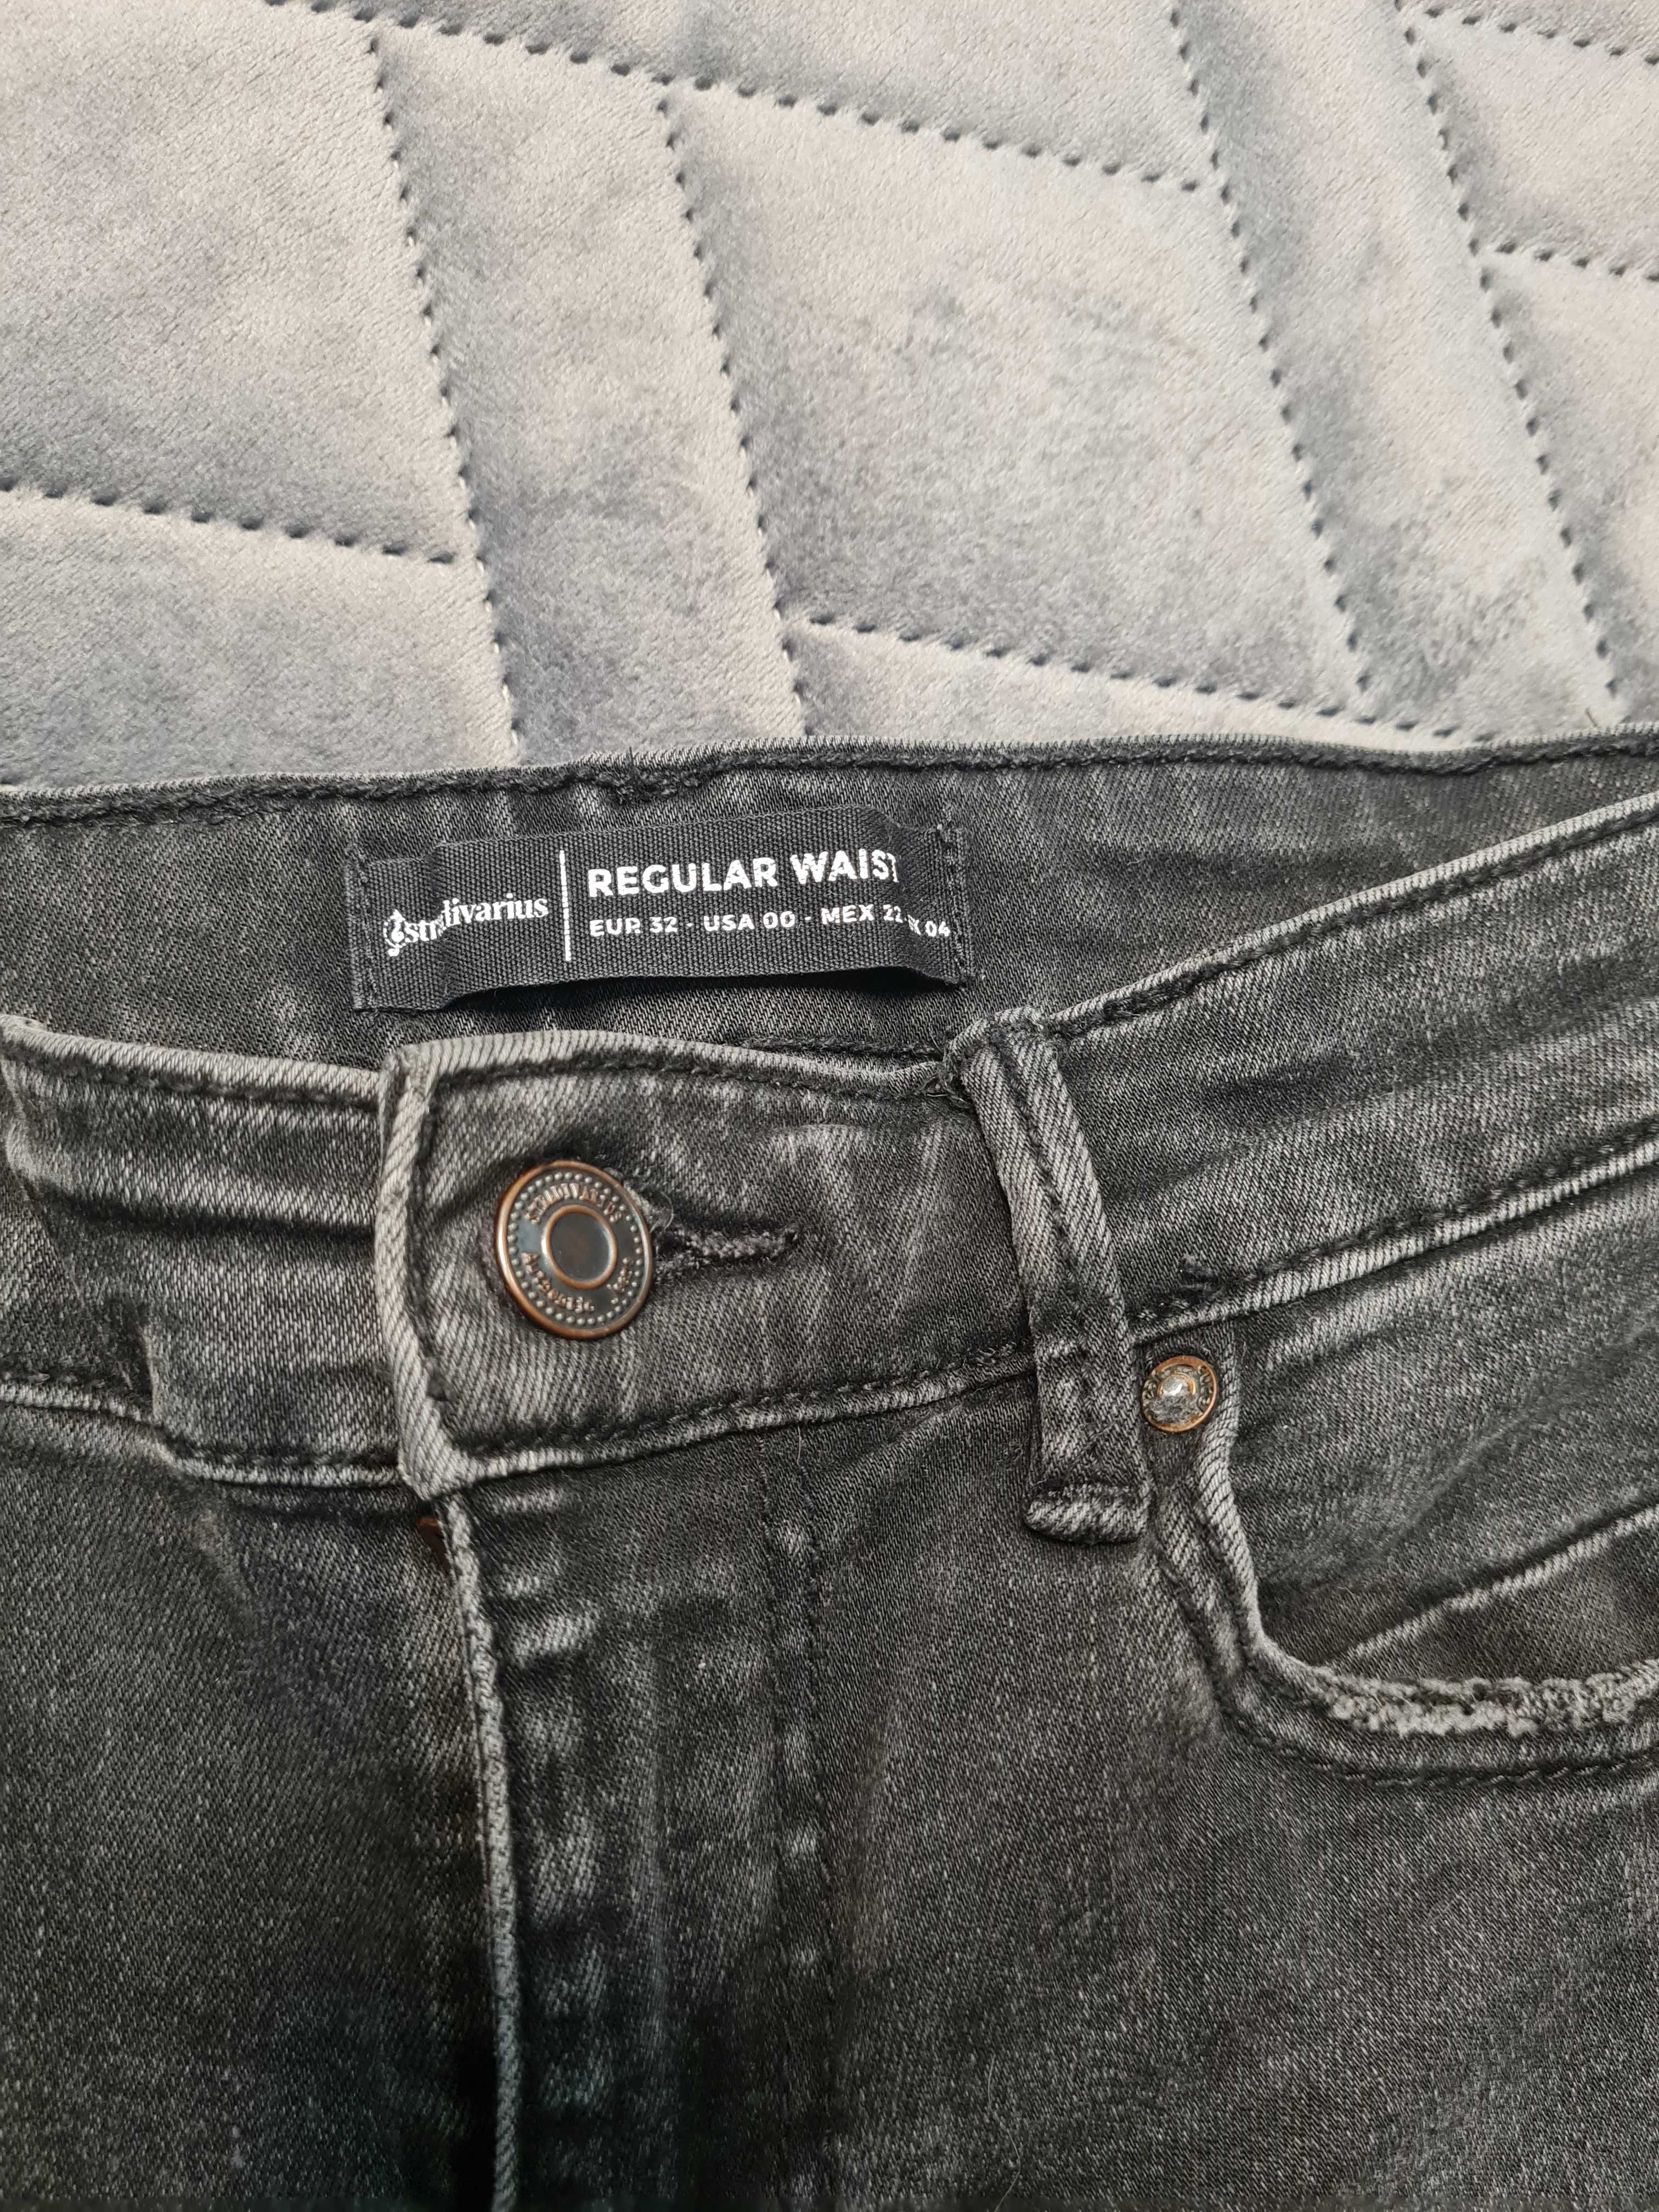 Spodnie skinny jeansy z dziurami Stradivarius rozmiar 32